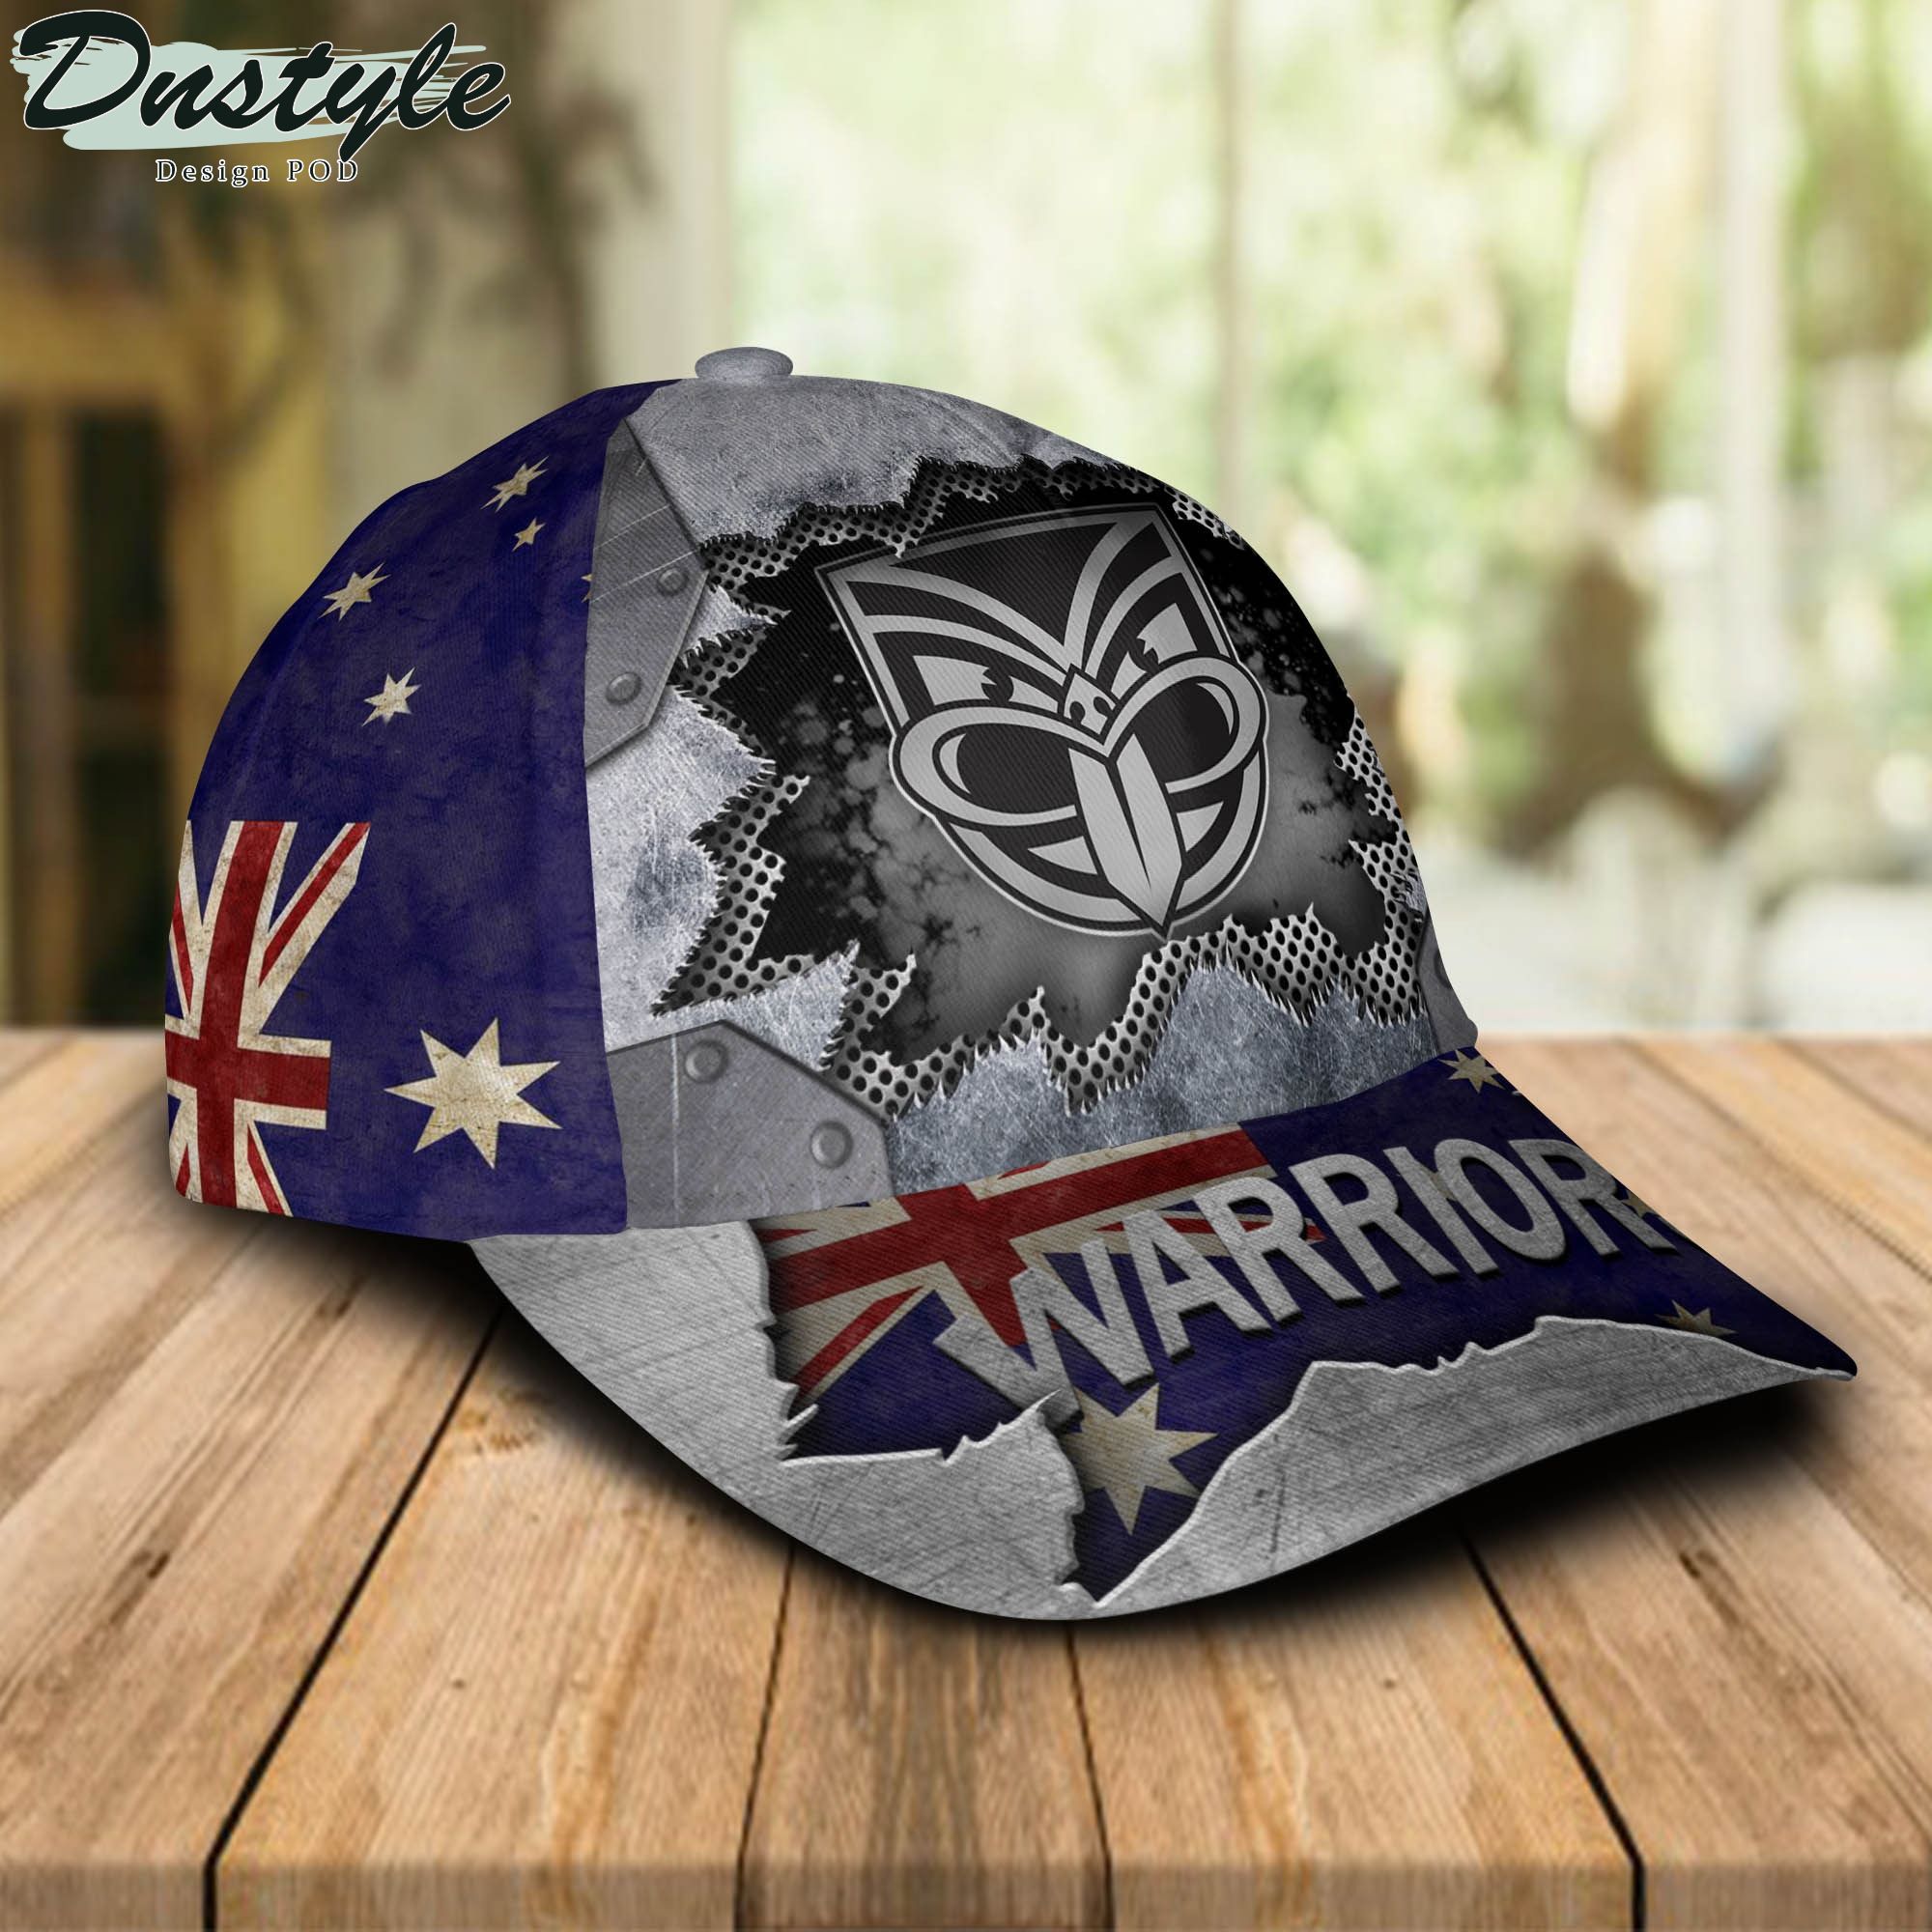 New Zealand Warriors Classic Cap